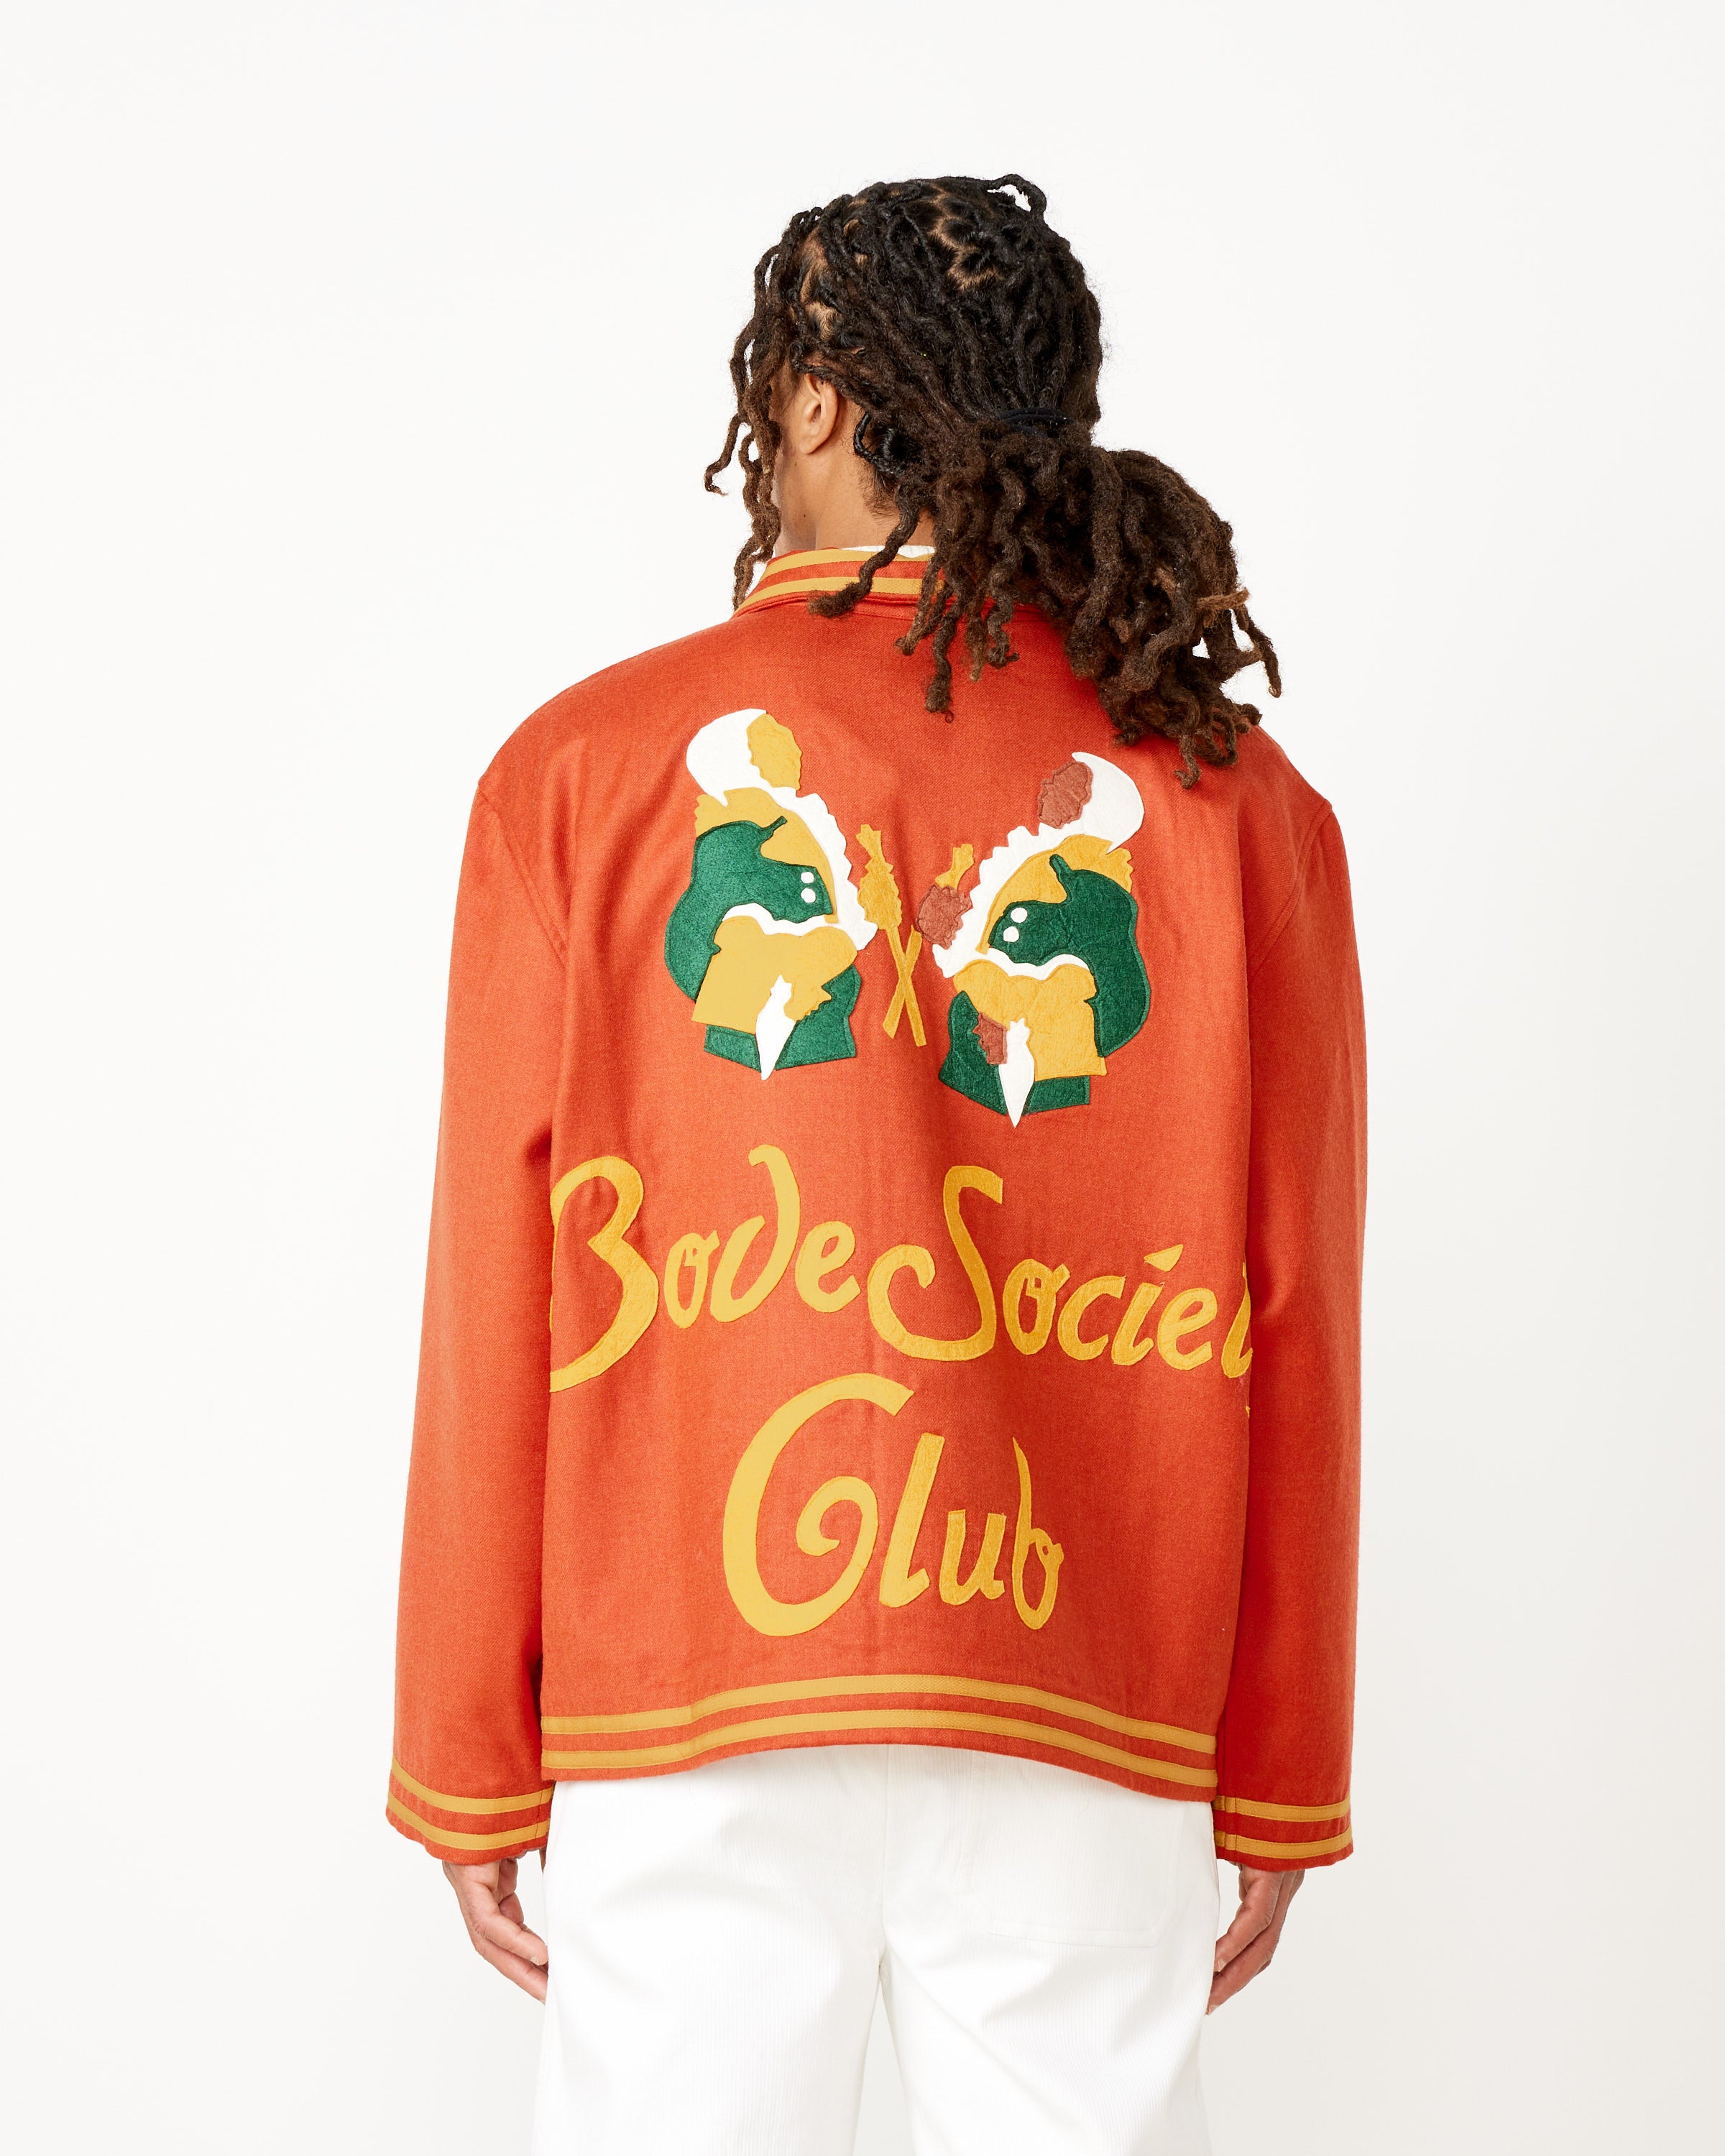 Society Club Jacket